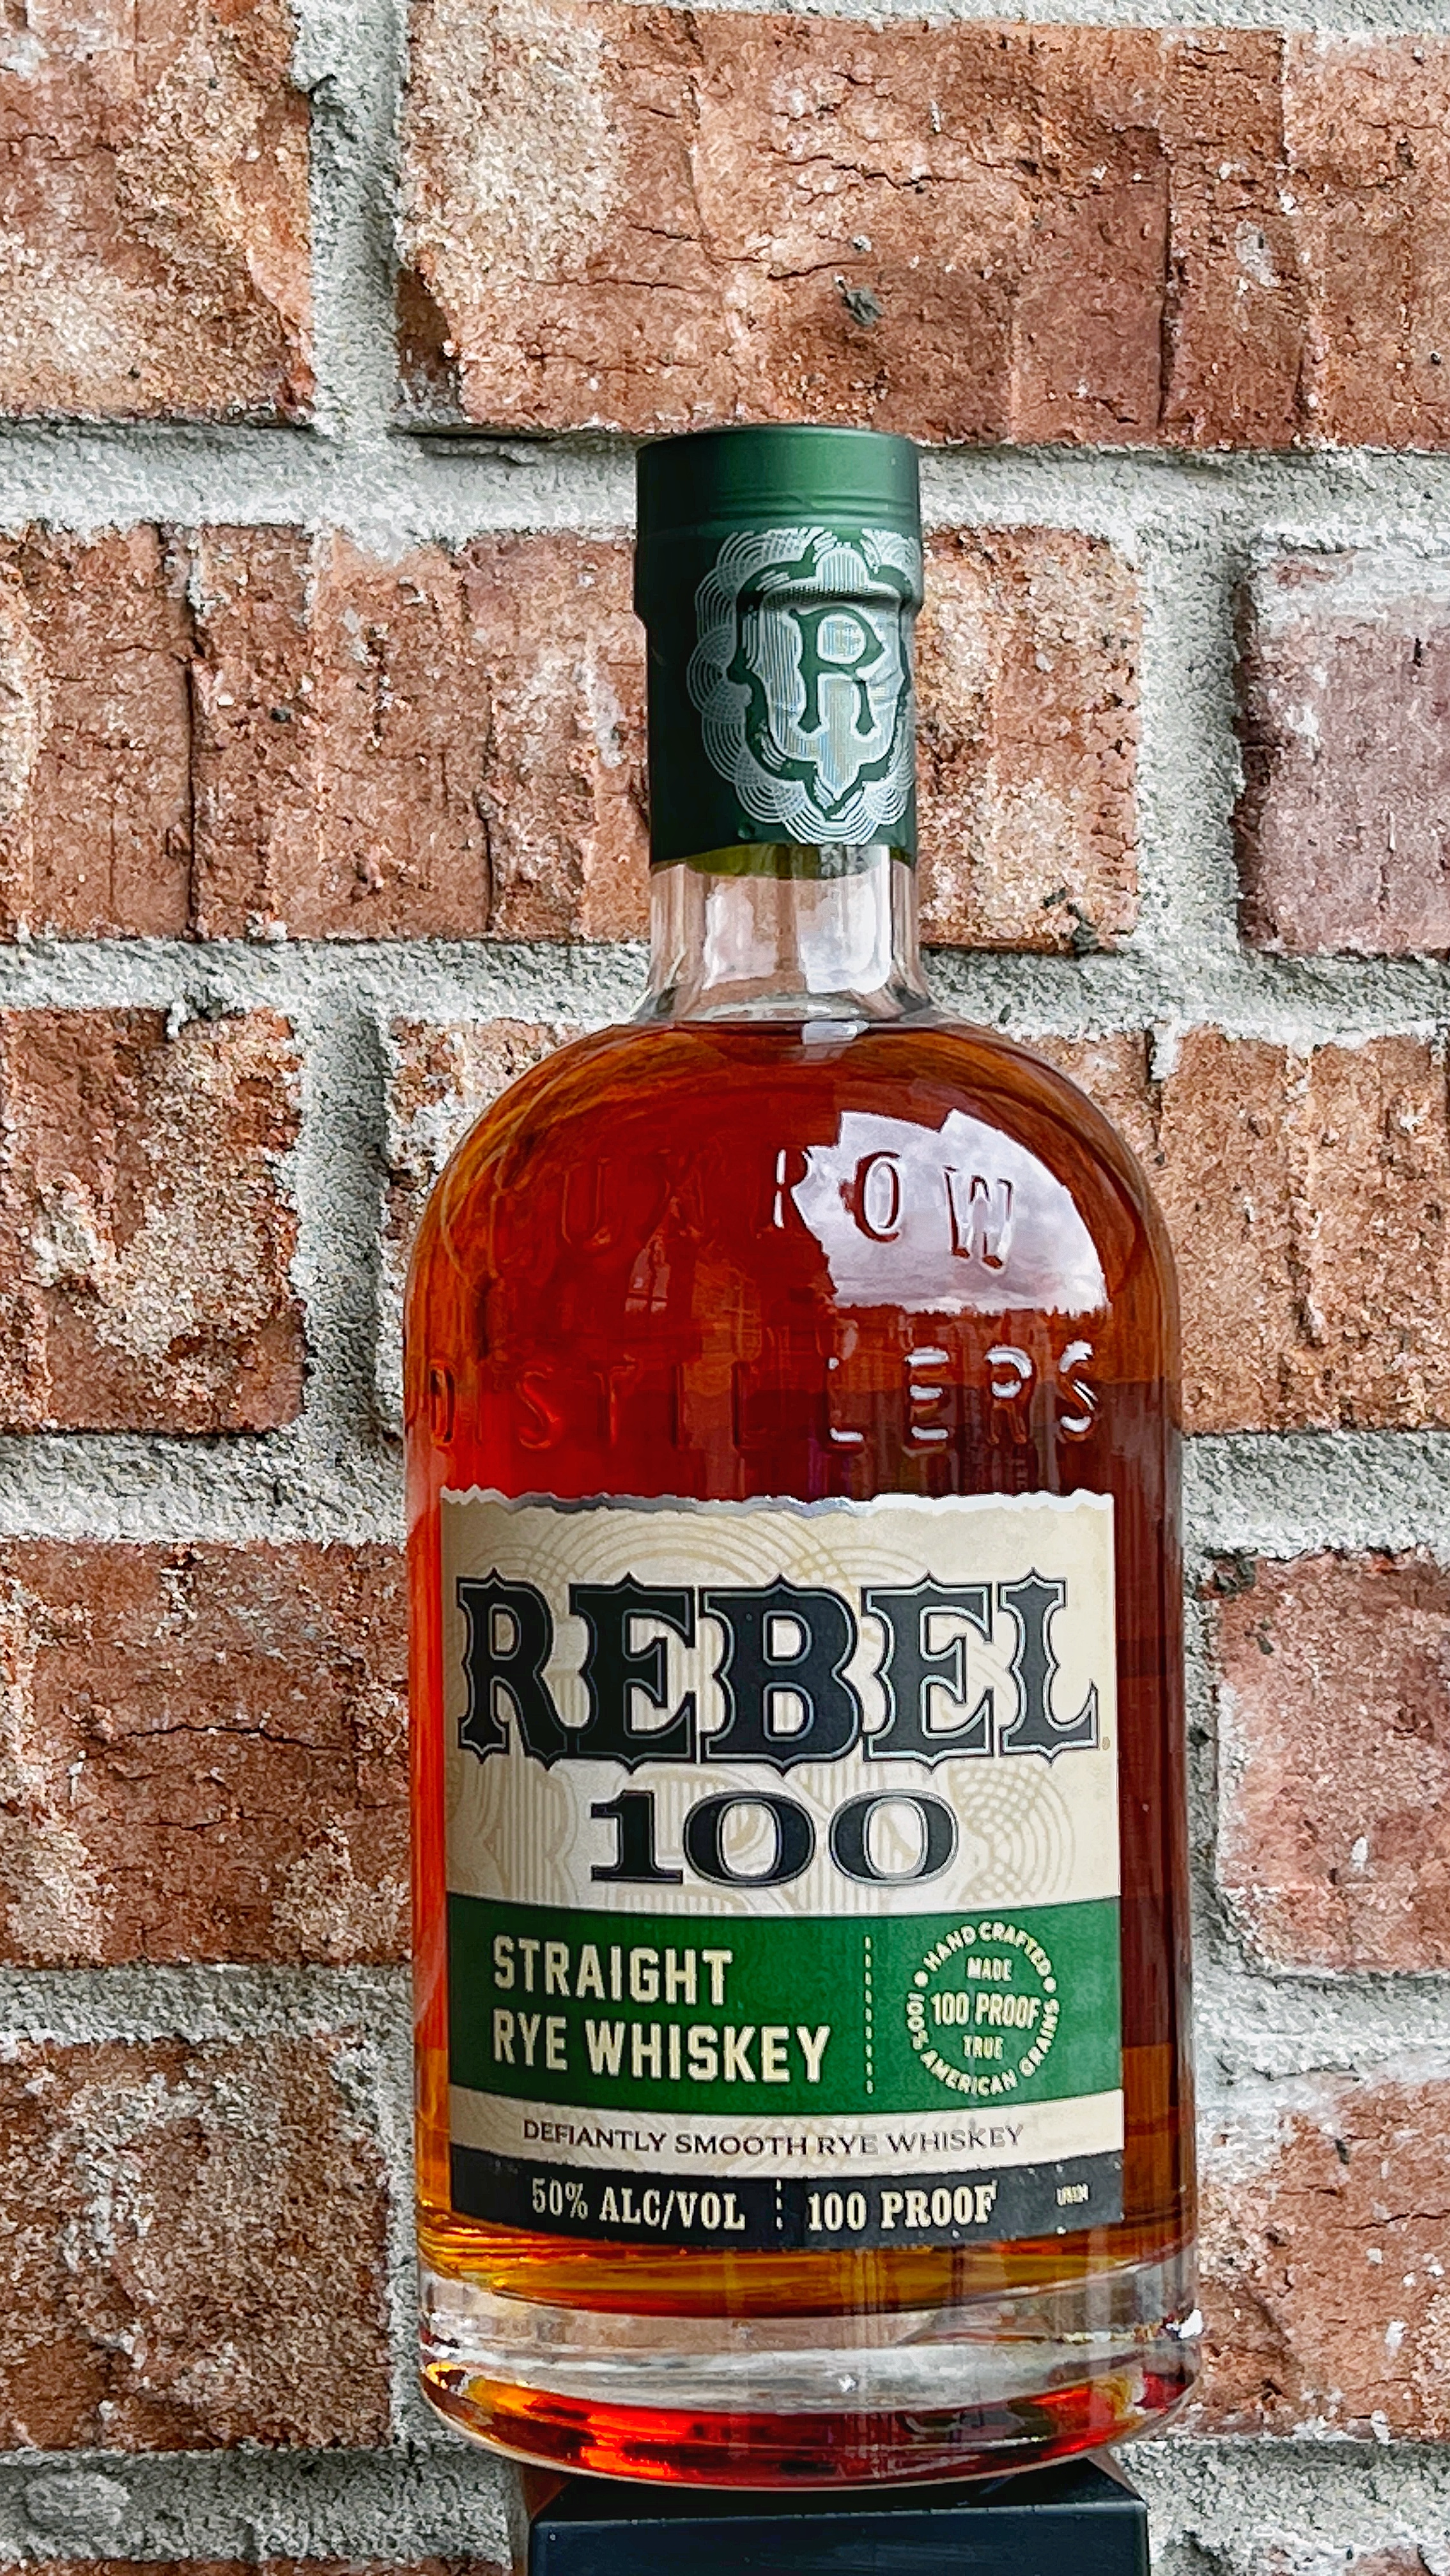 New Rebel 100 Rye, A Rye Whiskey Full Of Flavor